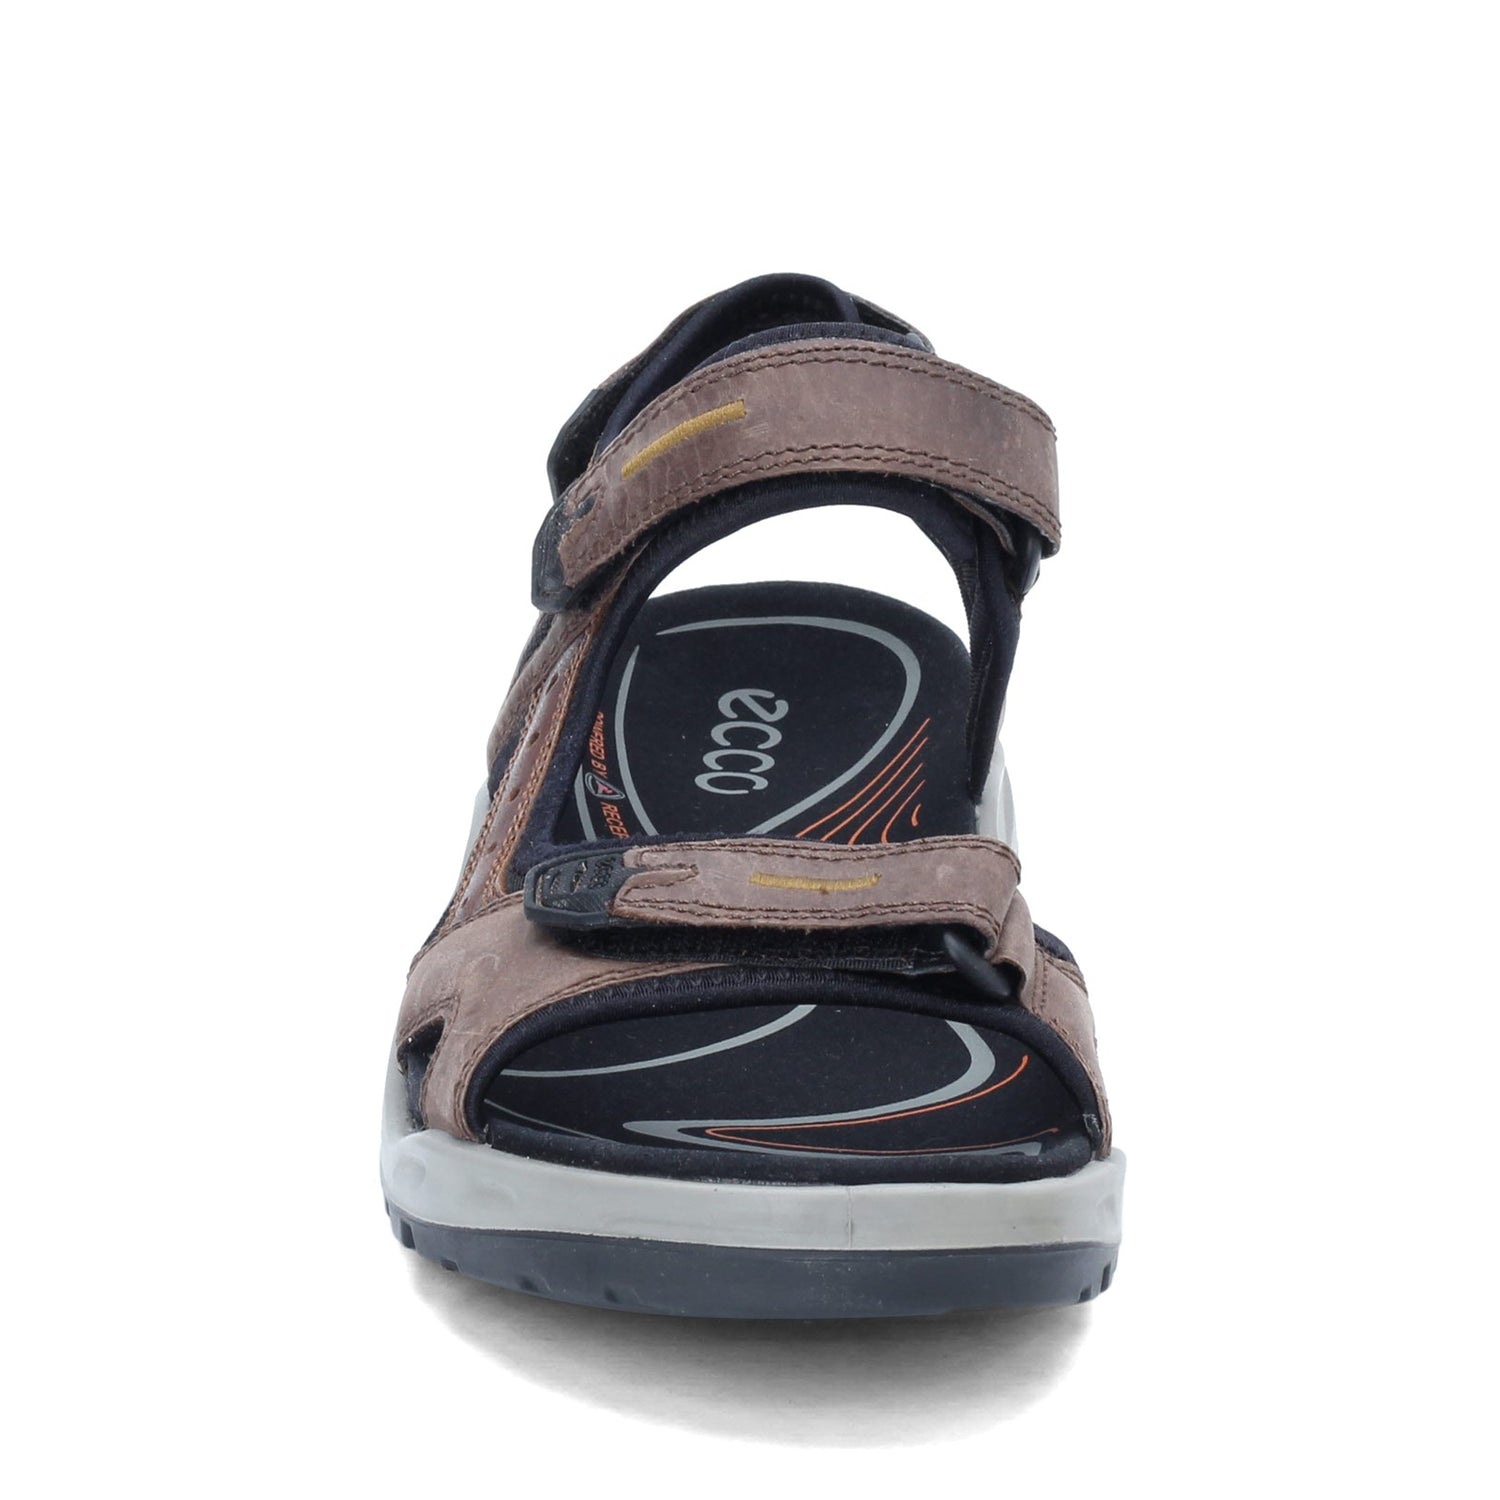 Peltz Shoes  Men's Ecco Yucatan Sandal ESPRESSO 069564-56401